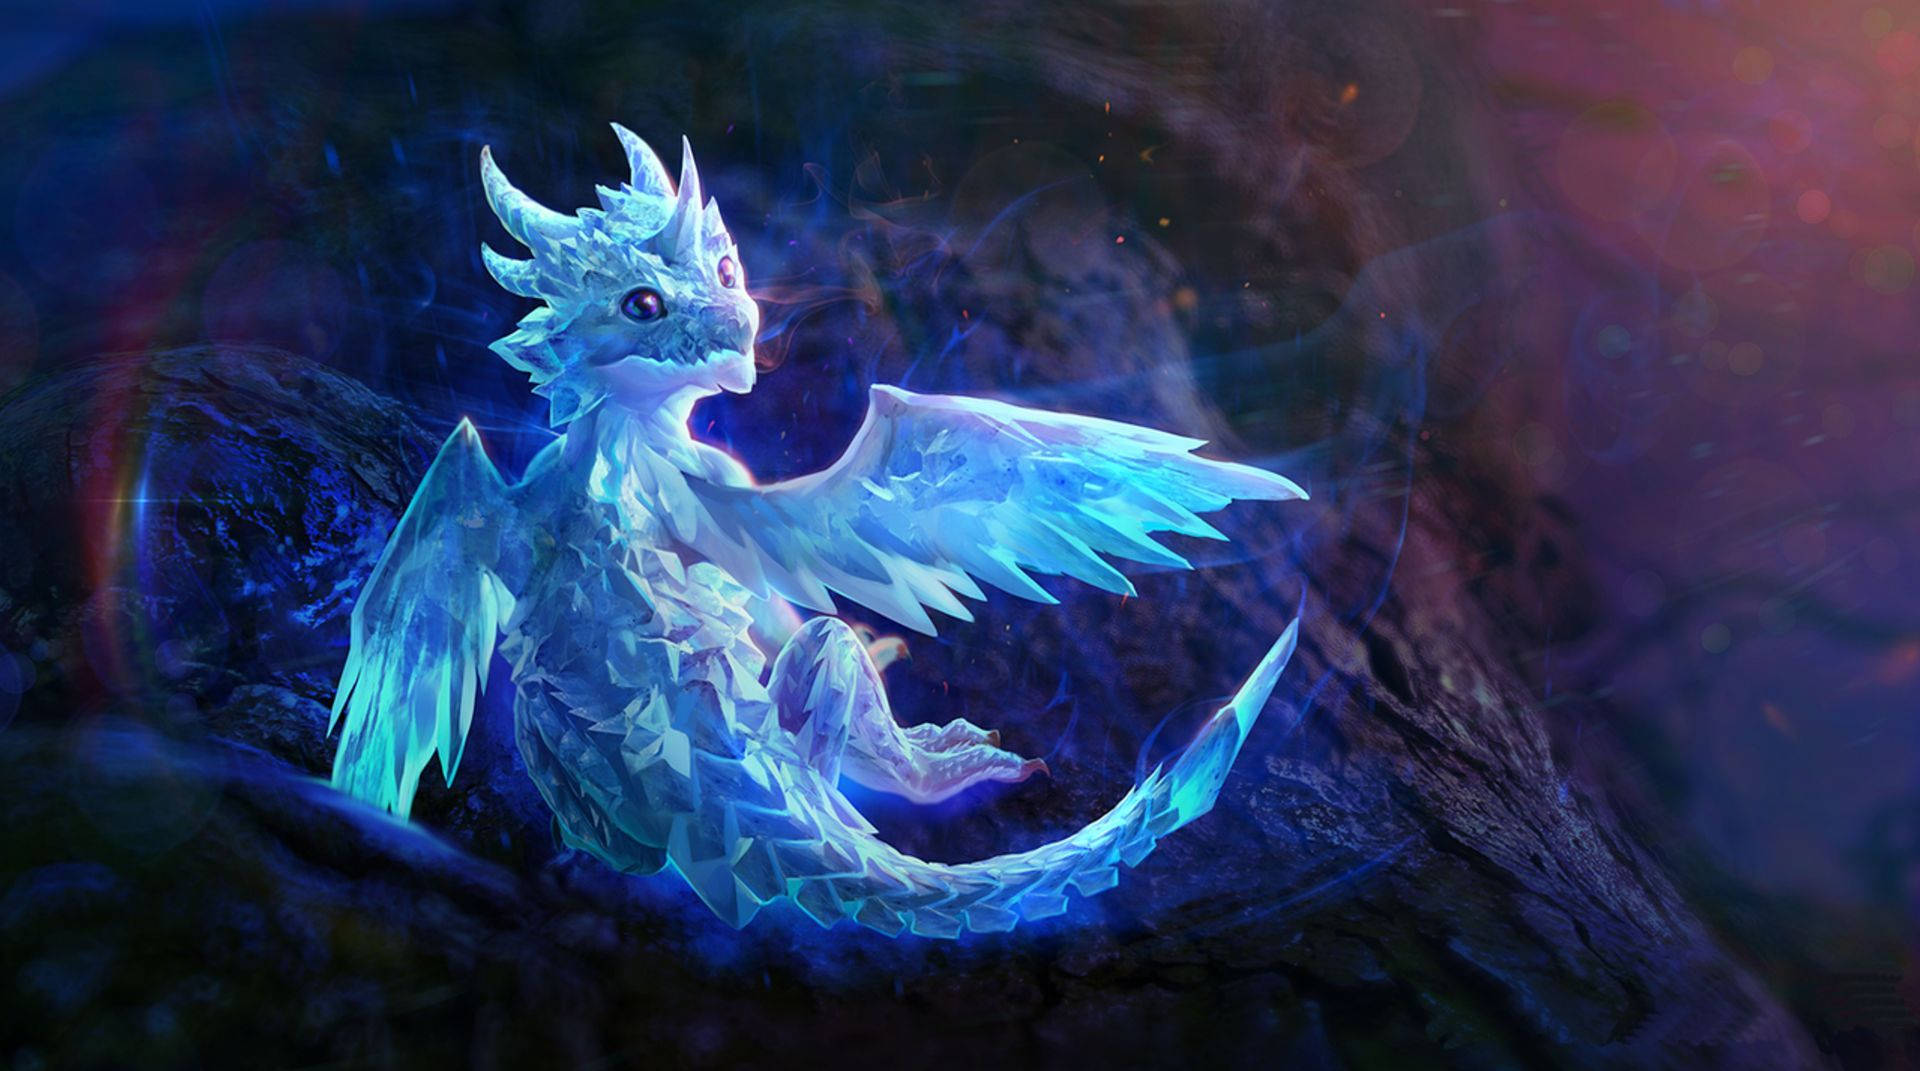 Crystal Blue Water Dragon